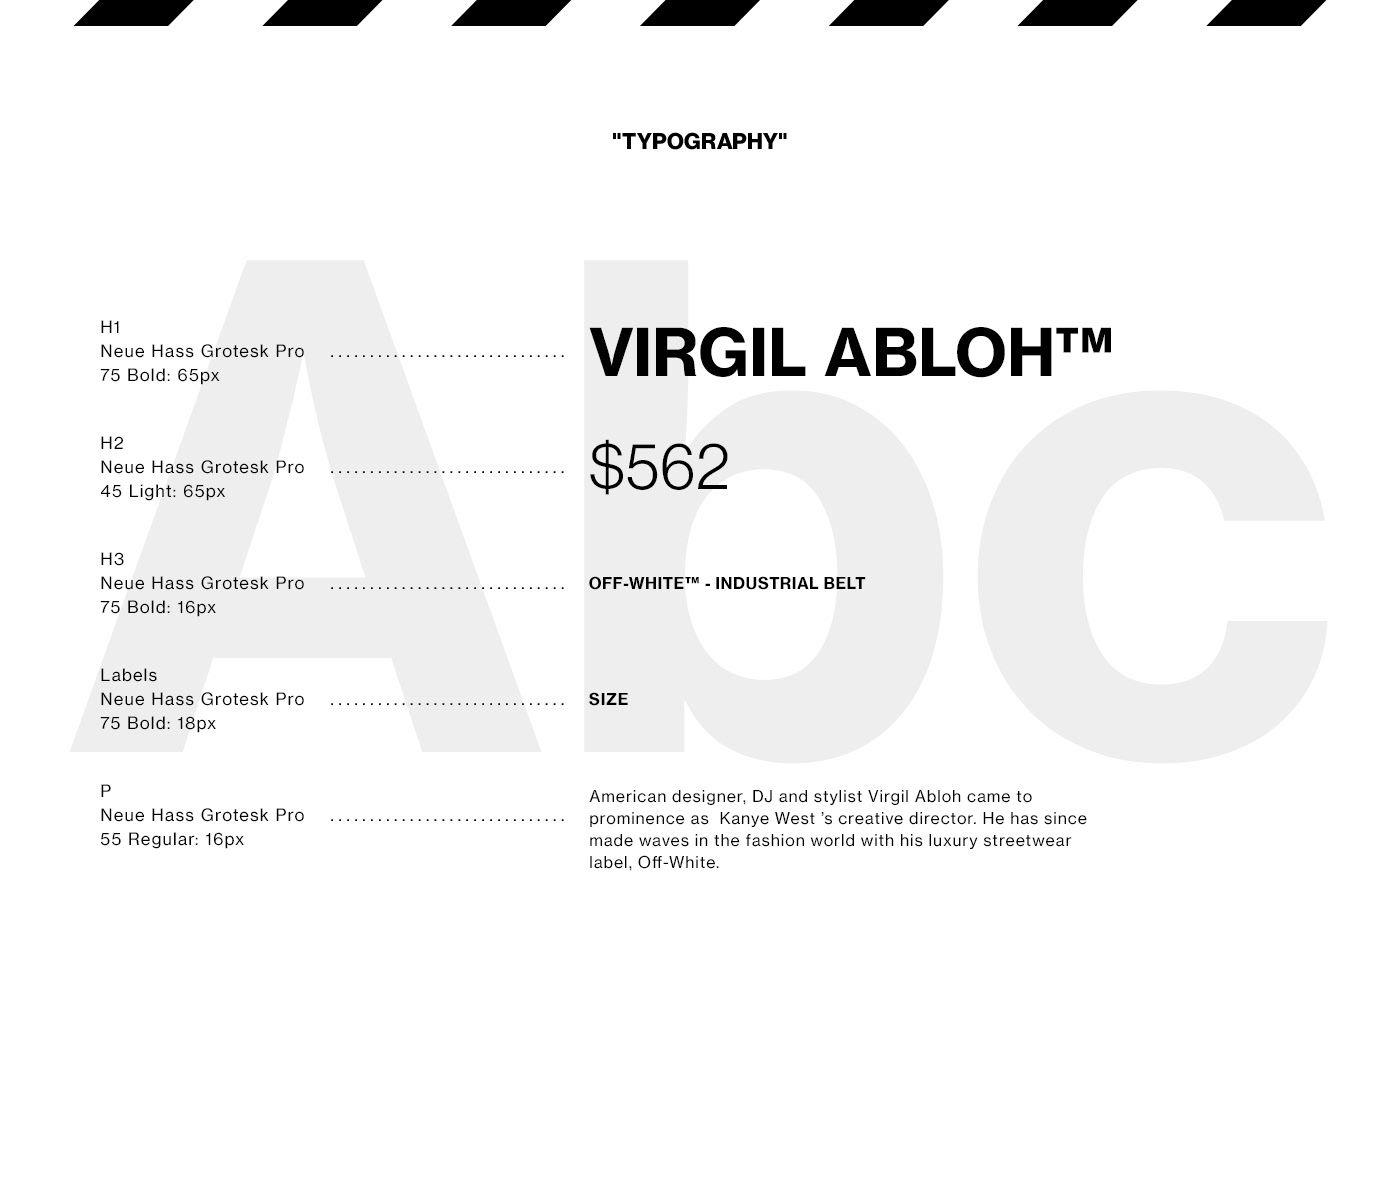 Off White Virgil Abloh Logo - Carlos Erazo - OFF-WHITE c/o Virgil Abloh 